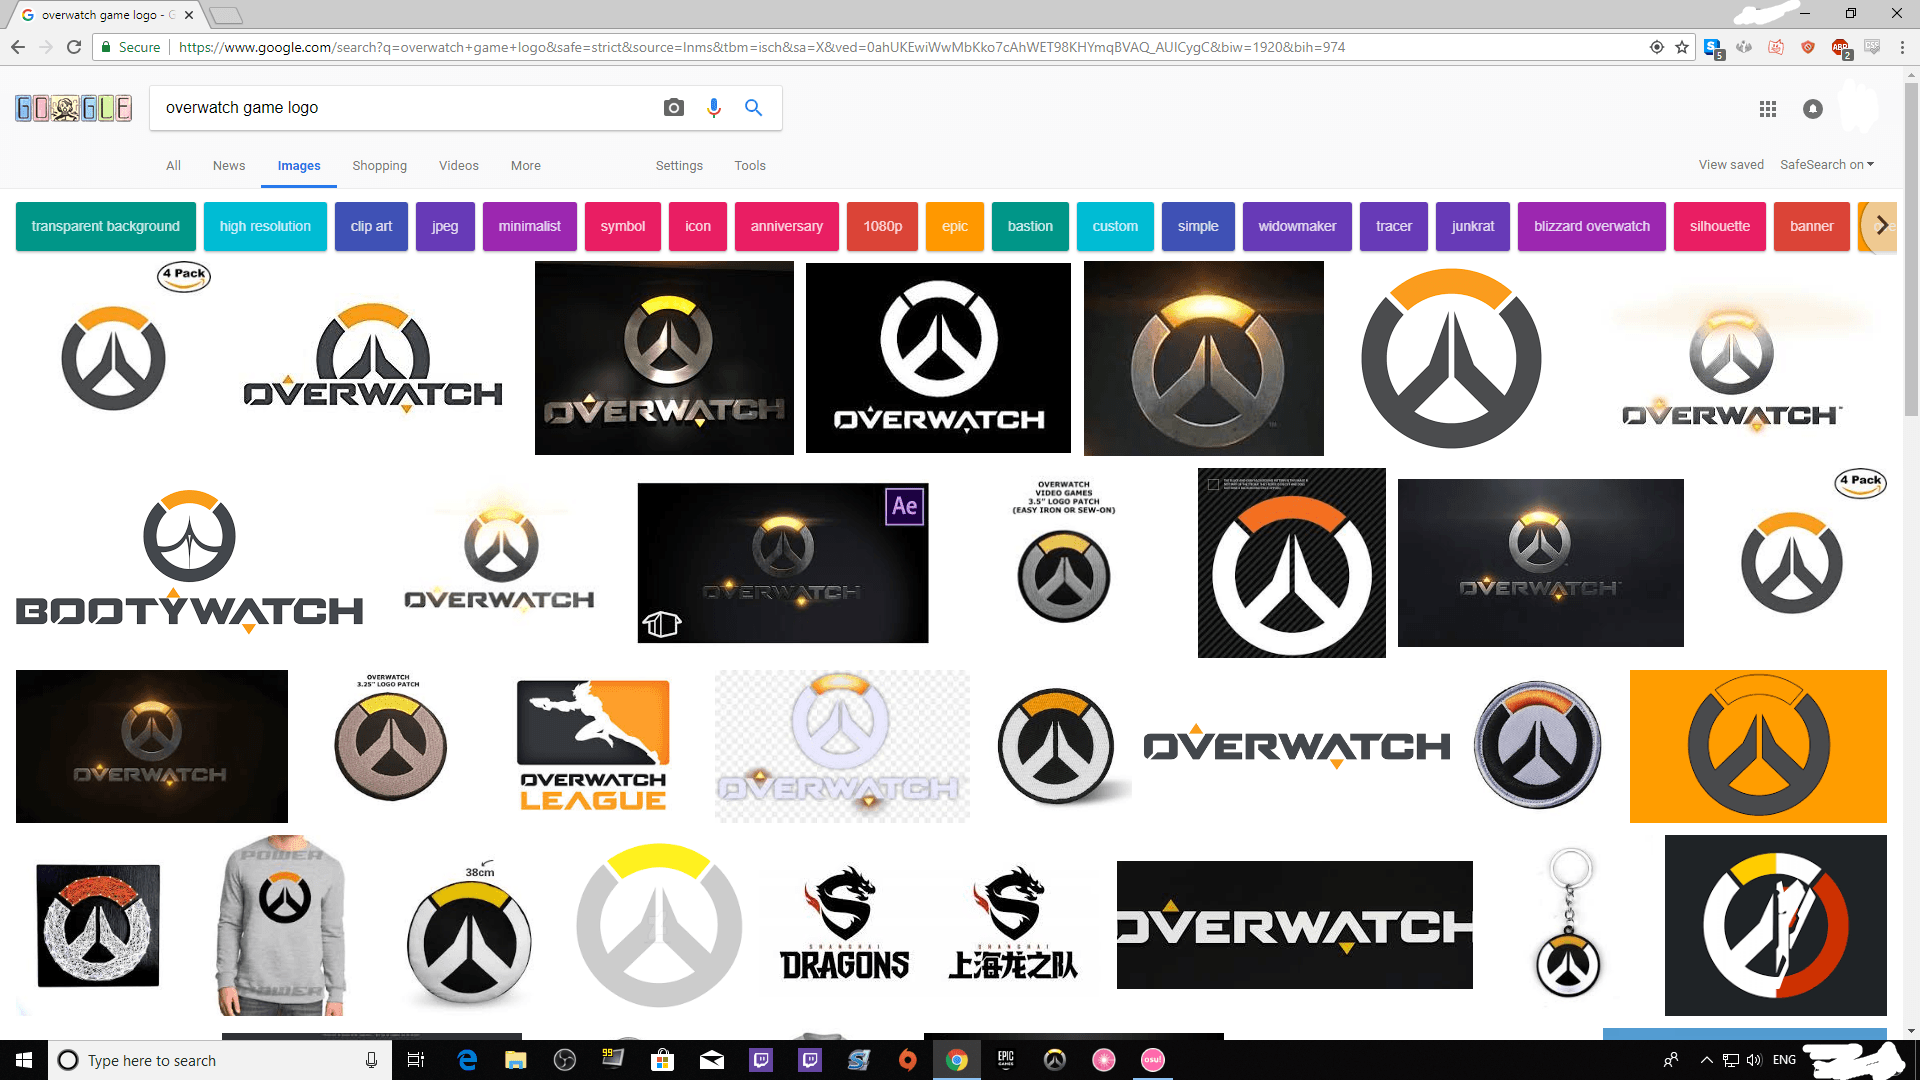 Lmao Logo - Blizzard got the Overwatch logo from google lmao